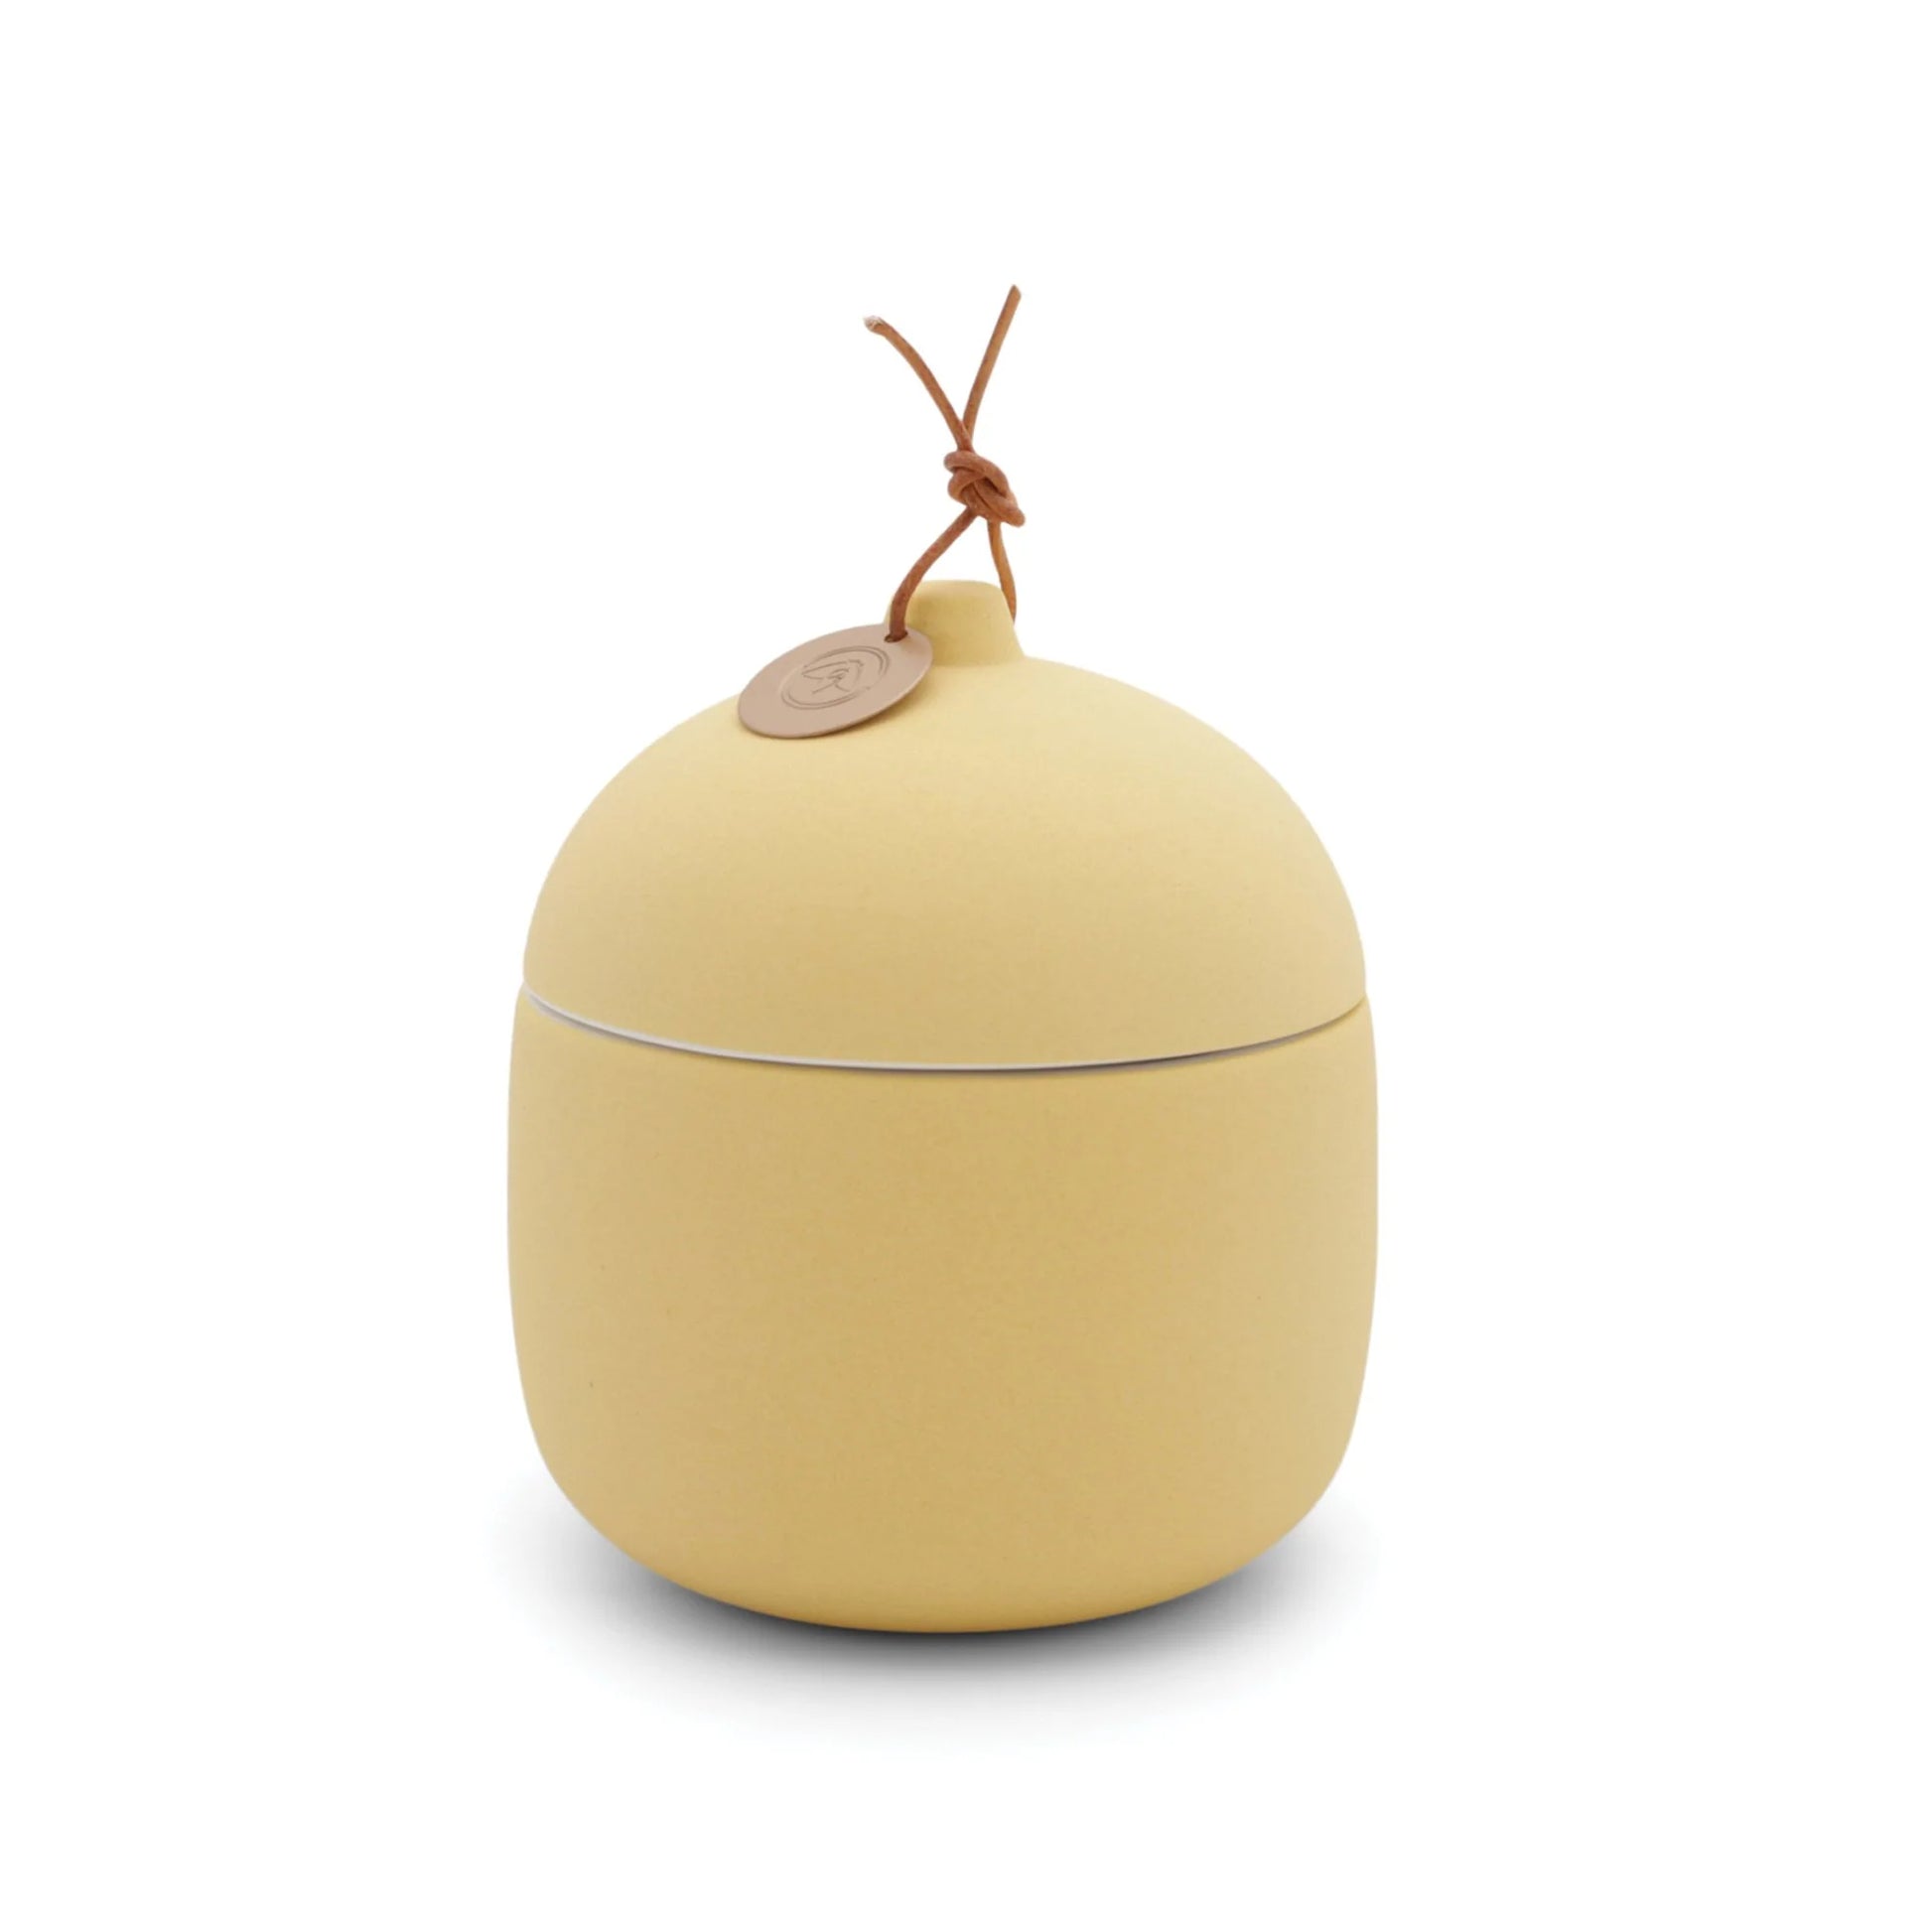 Keepsake 12 oz Candle - Lemon Hibiscus - colored yellow clay vessel